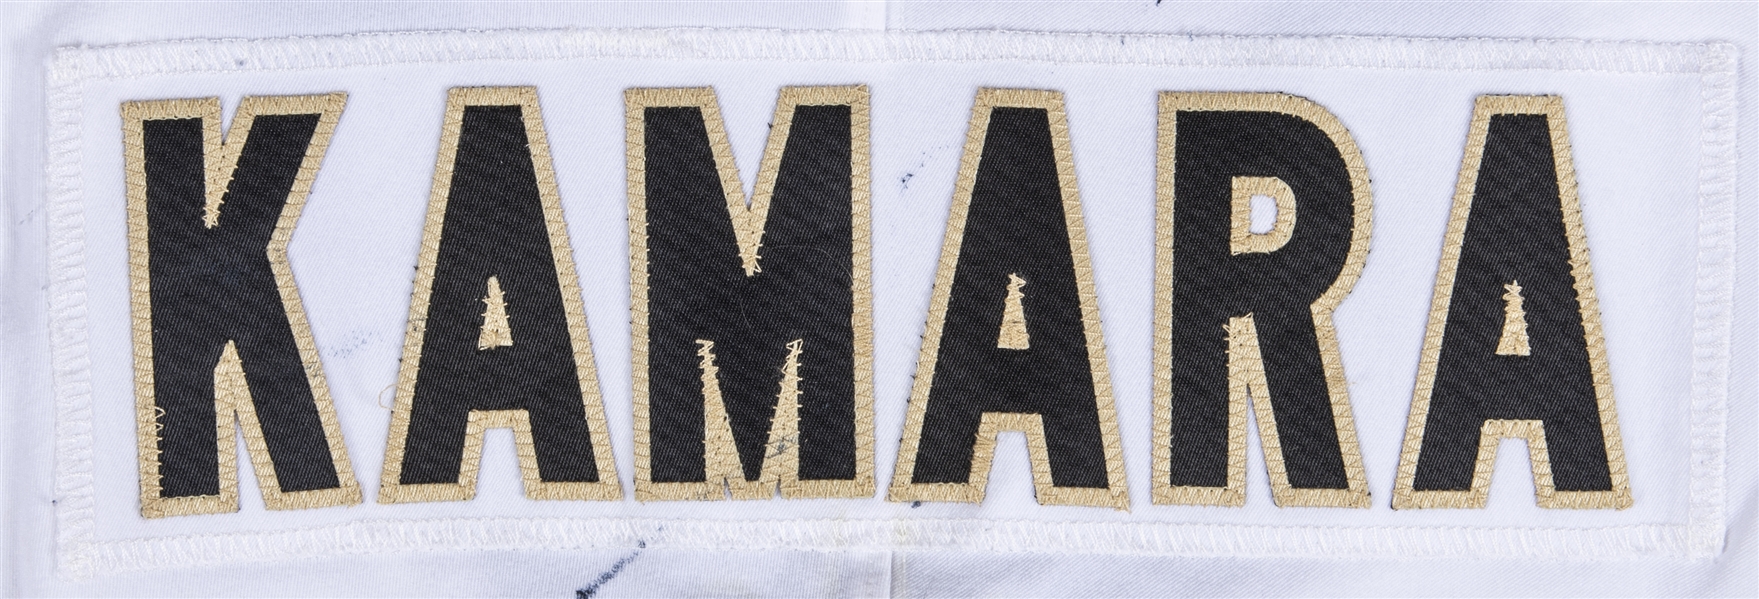 Signed Alvin Kamara Jersey for Sale in Ama, LA - OfferUp